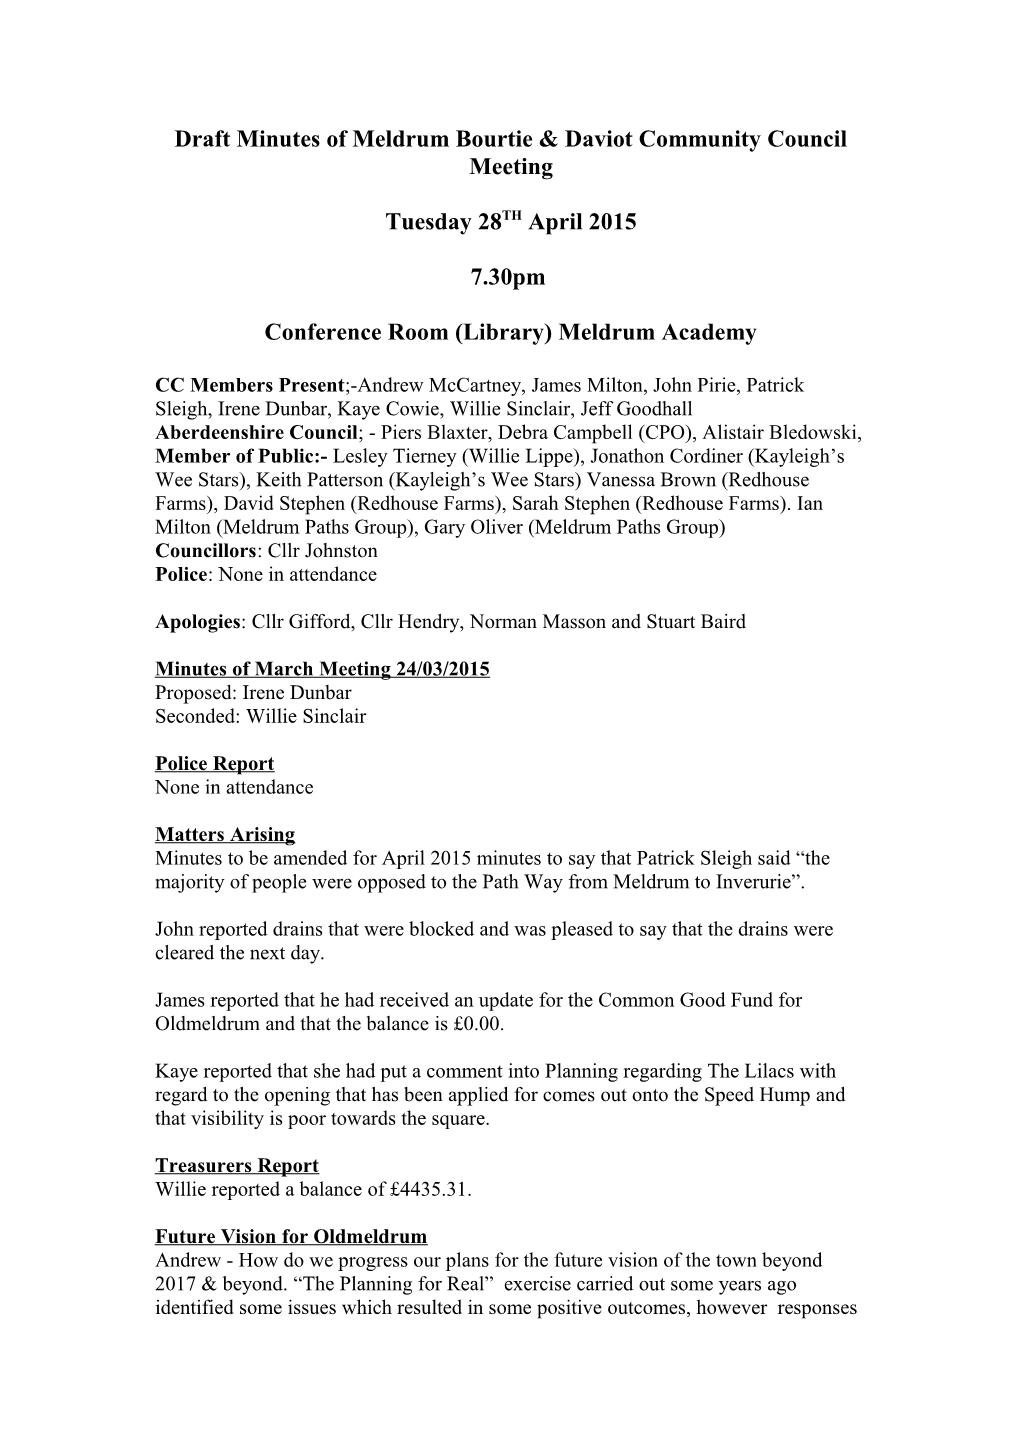 Draft Minutes of Meldrum Bourtie & Daviot Community Council Meeting